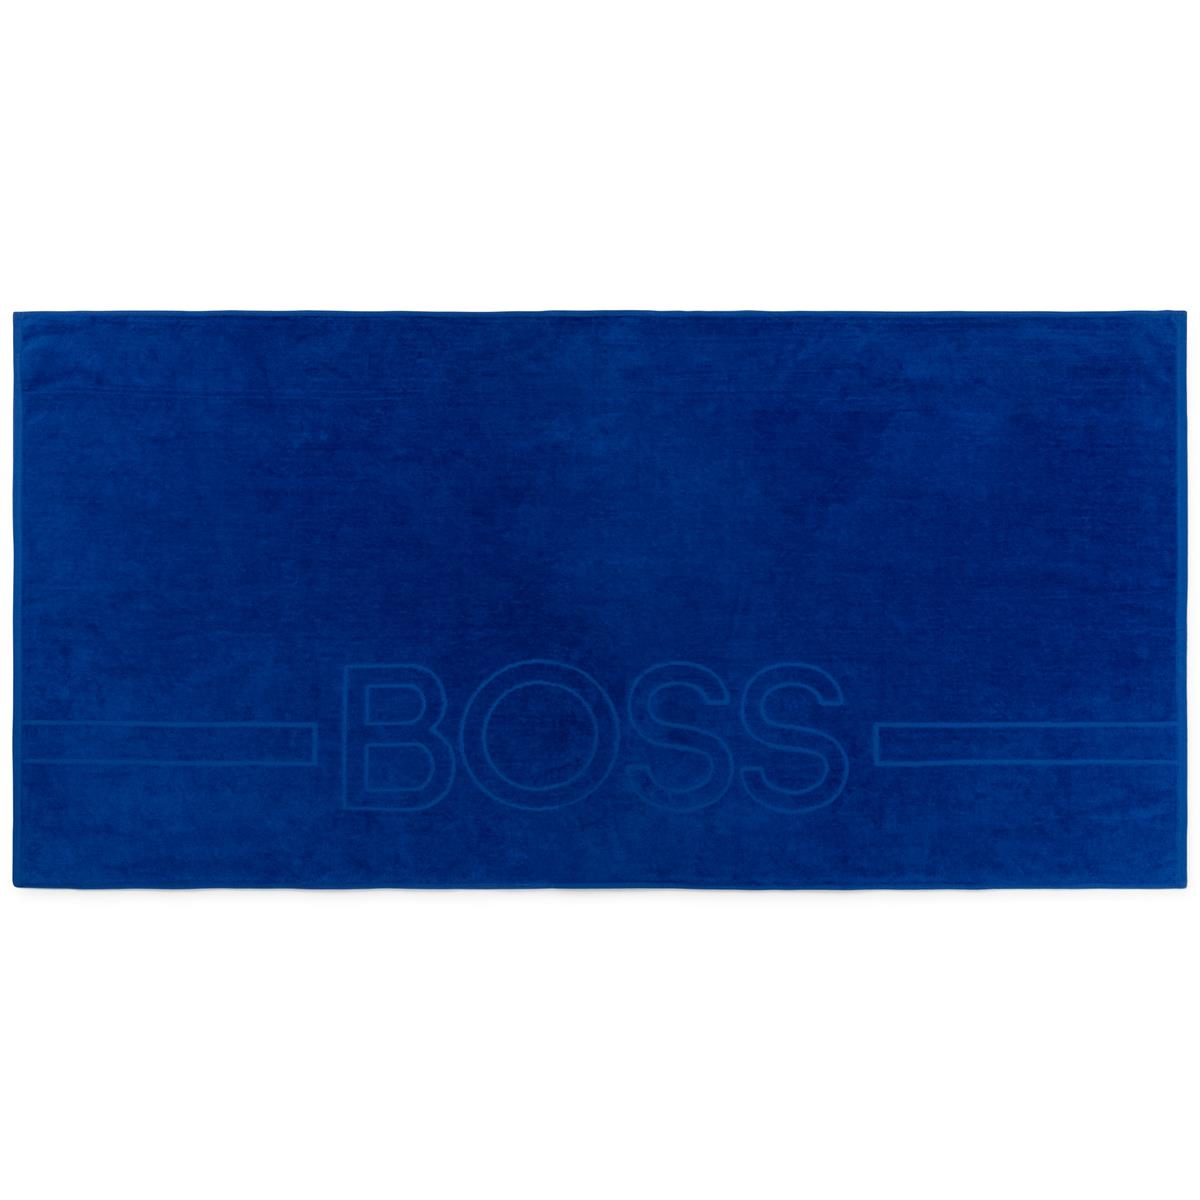 Blue Towel